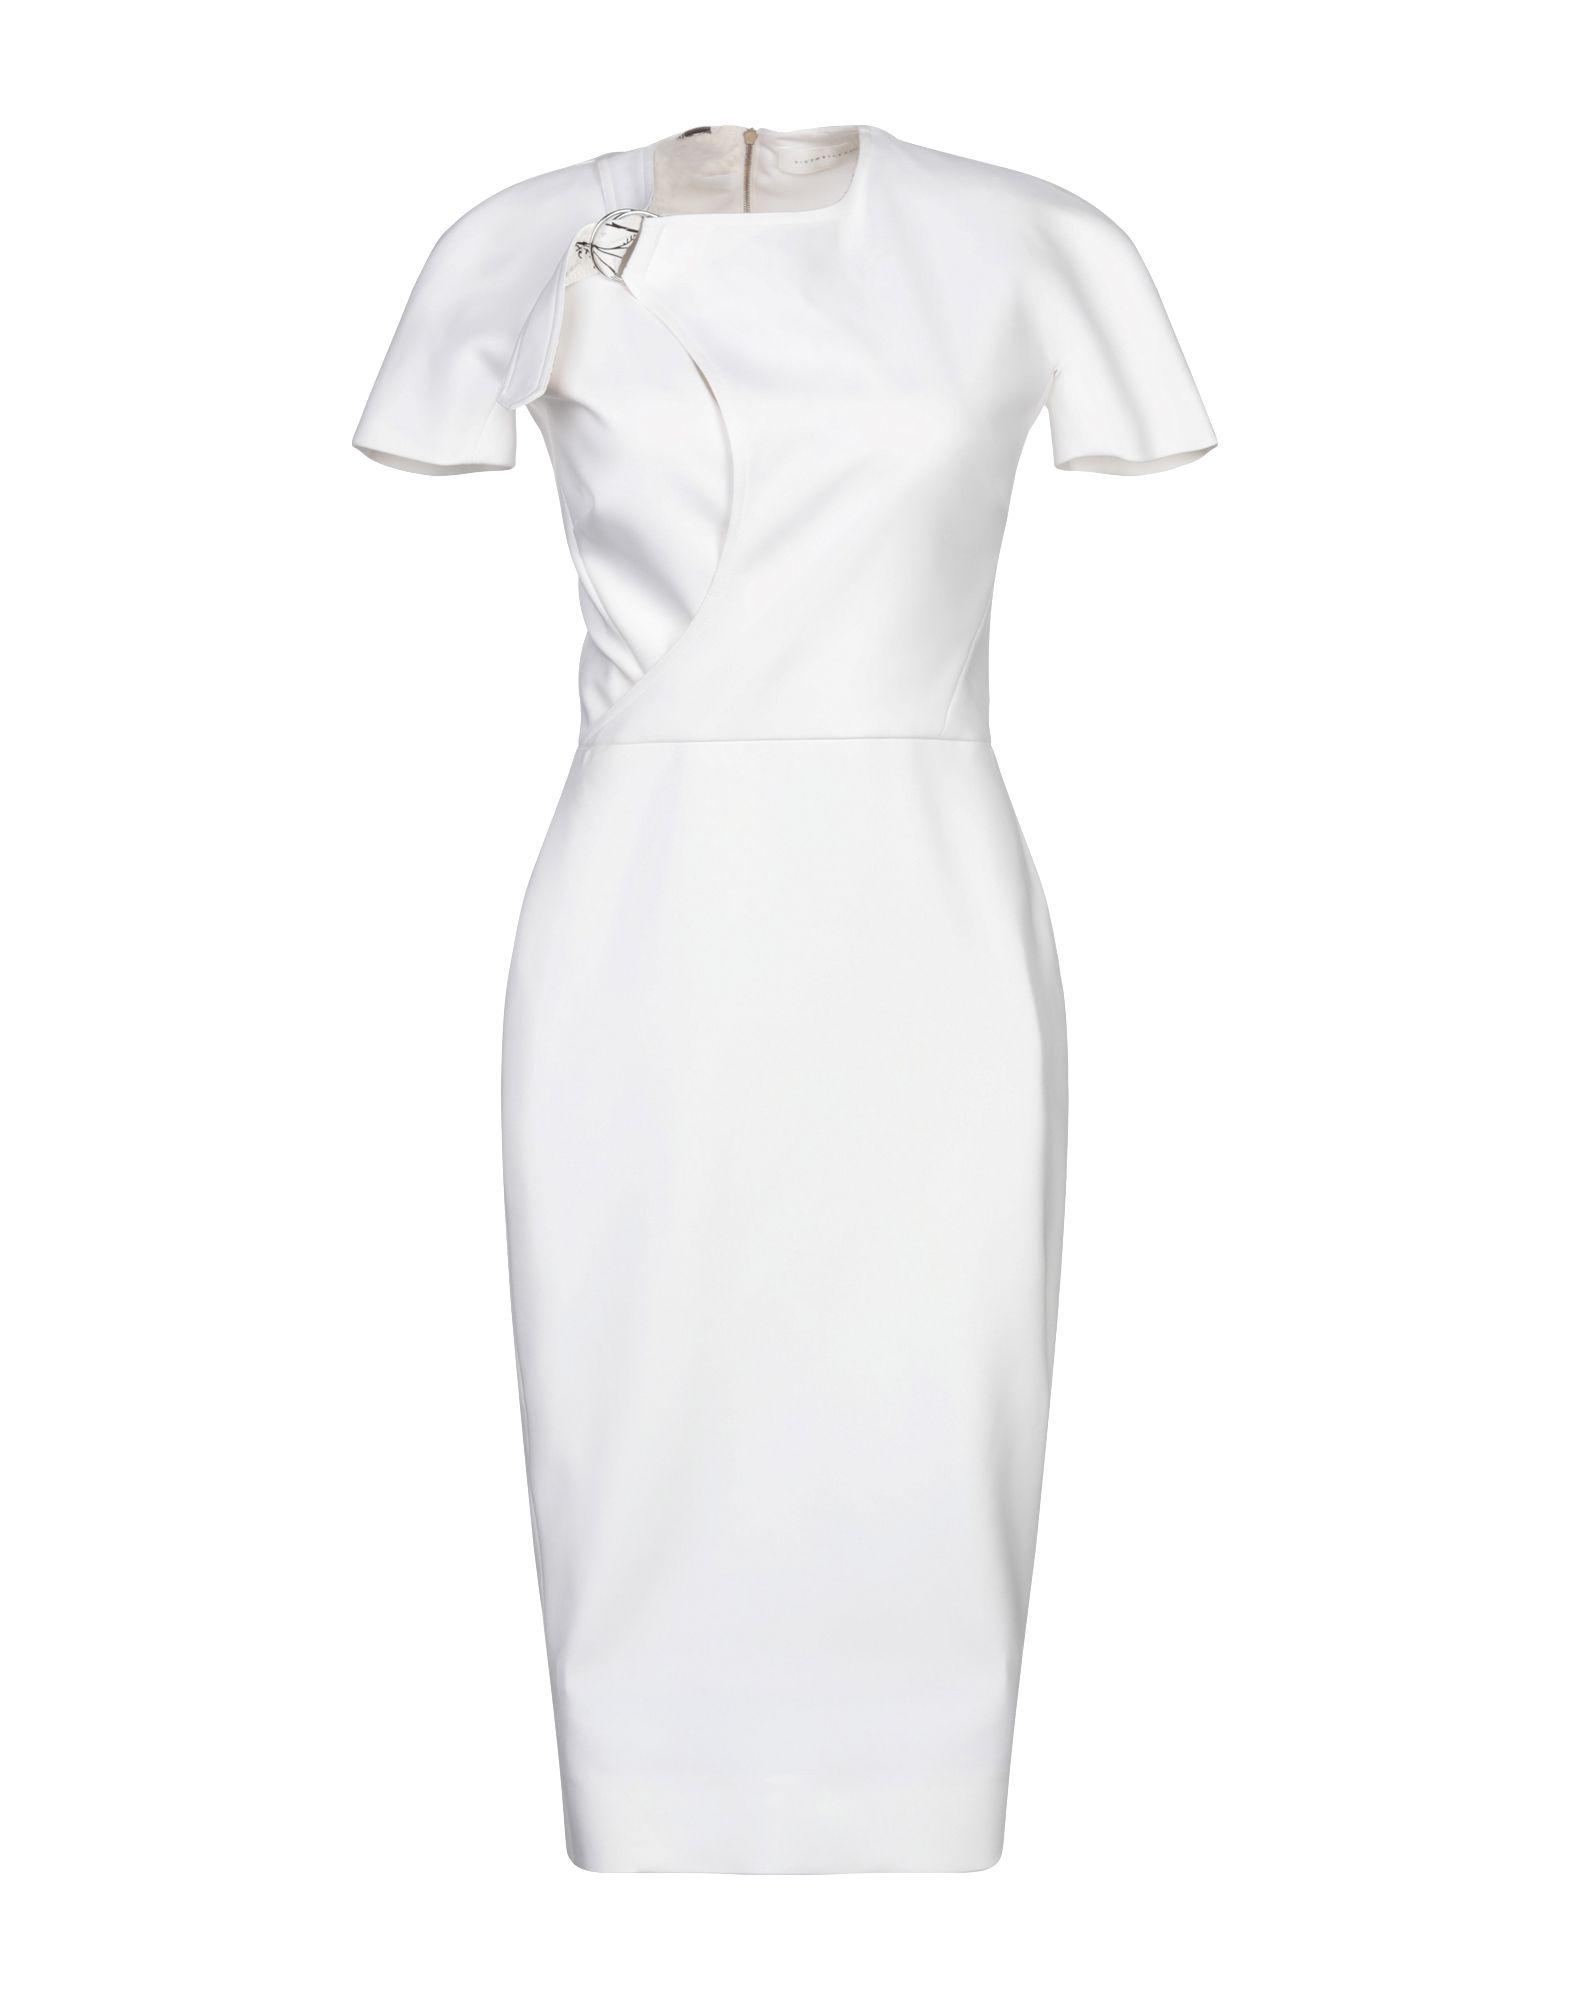 Victoria Beckham Cotton Knee-length Dress in White - Lyst